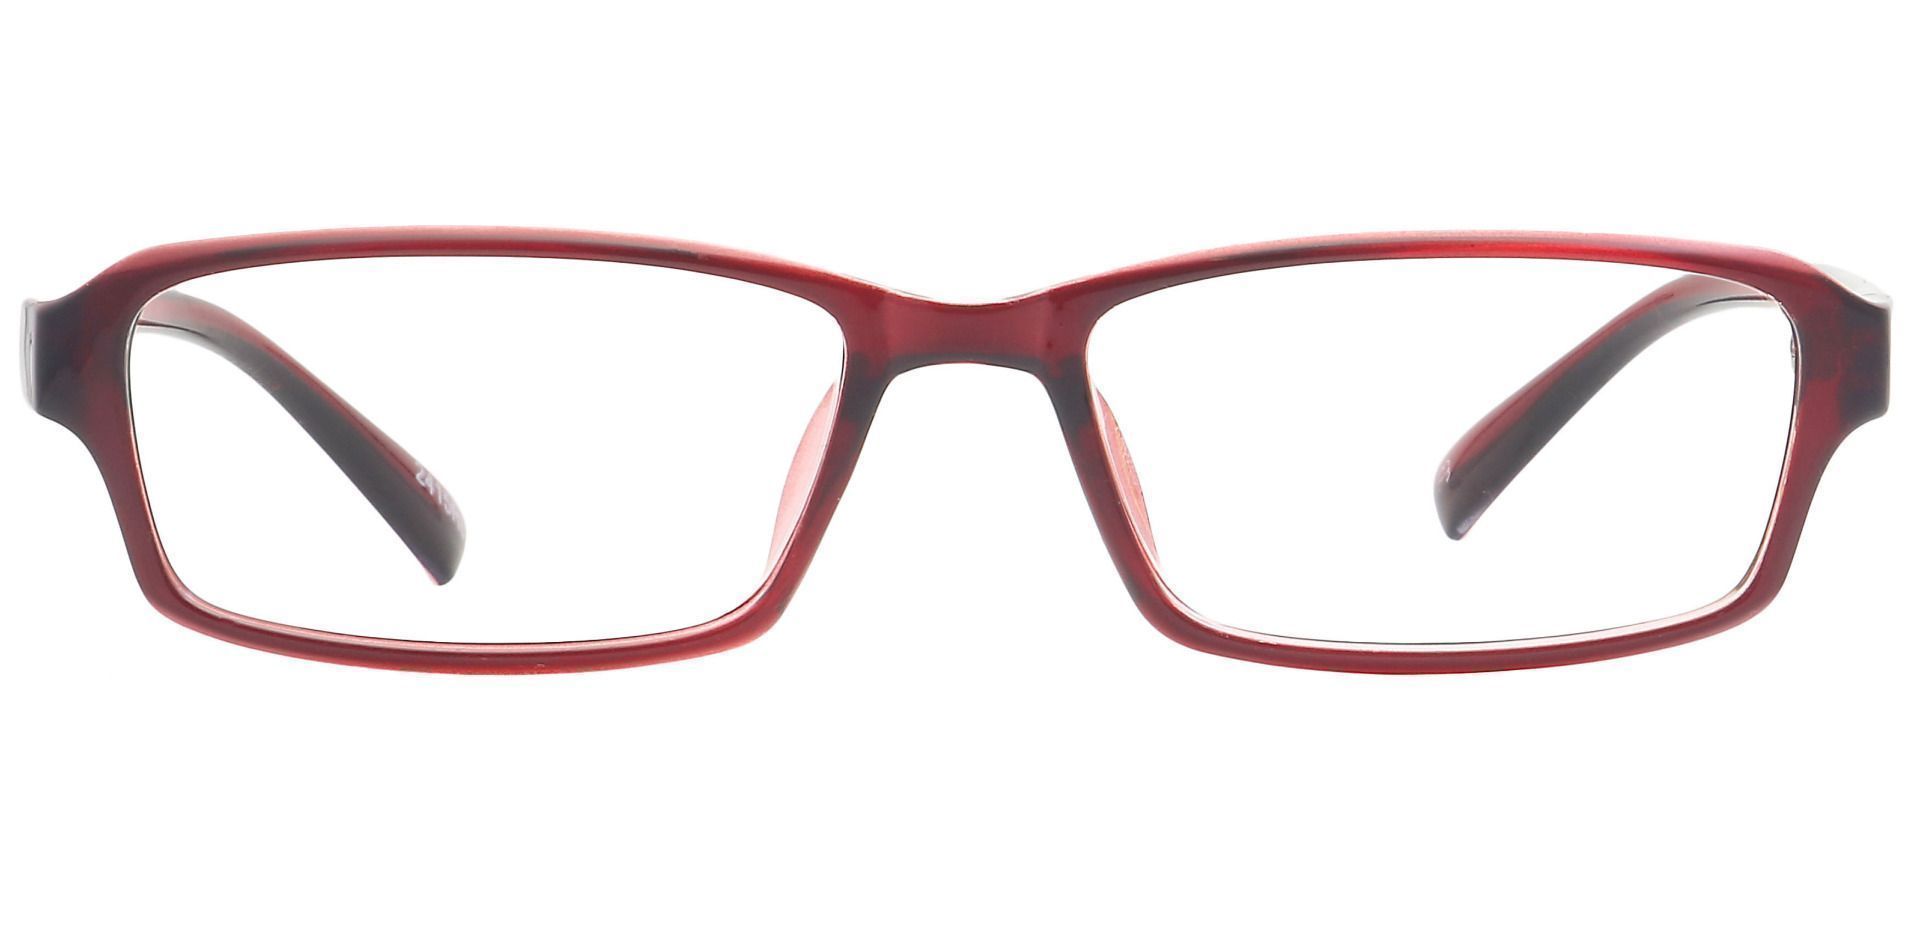 Delaney Rectangle Blue Light Blocking Glasses - Red